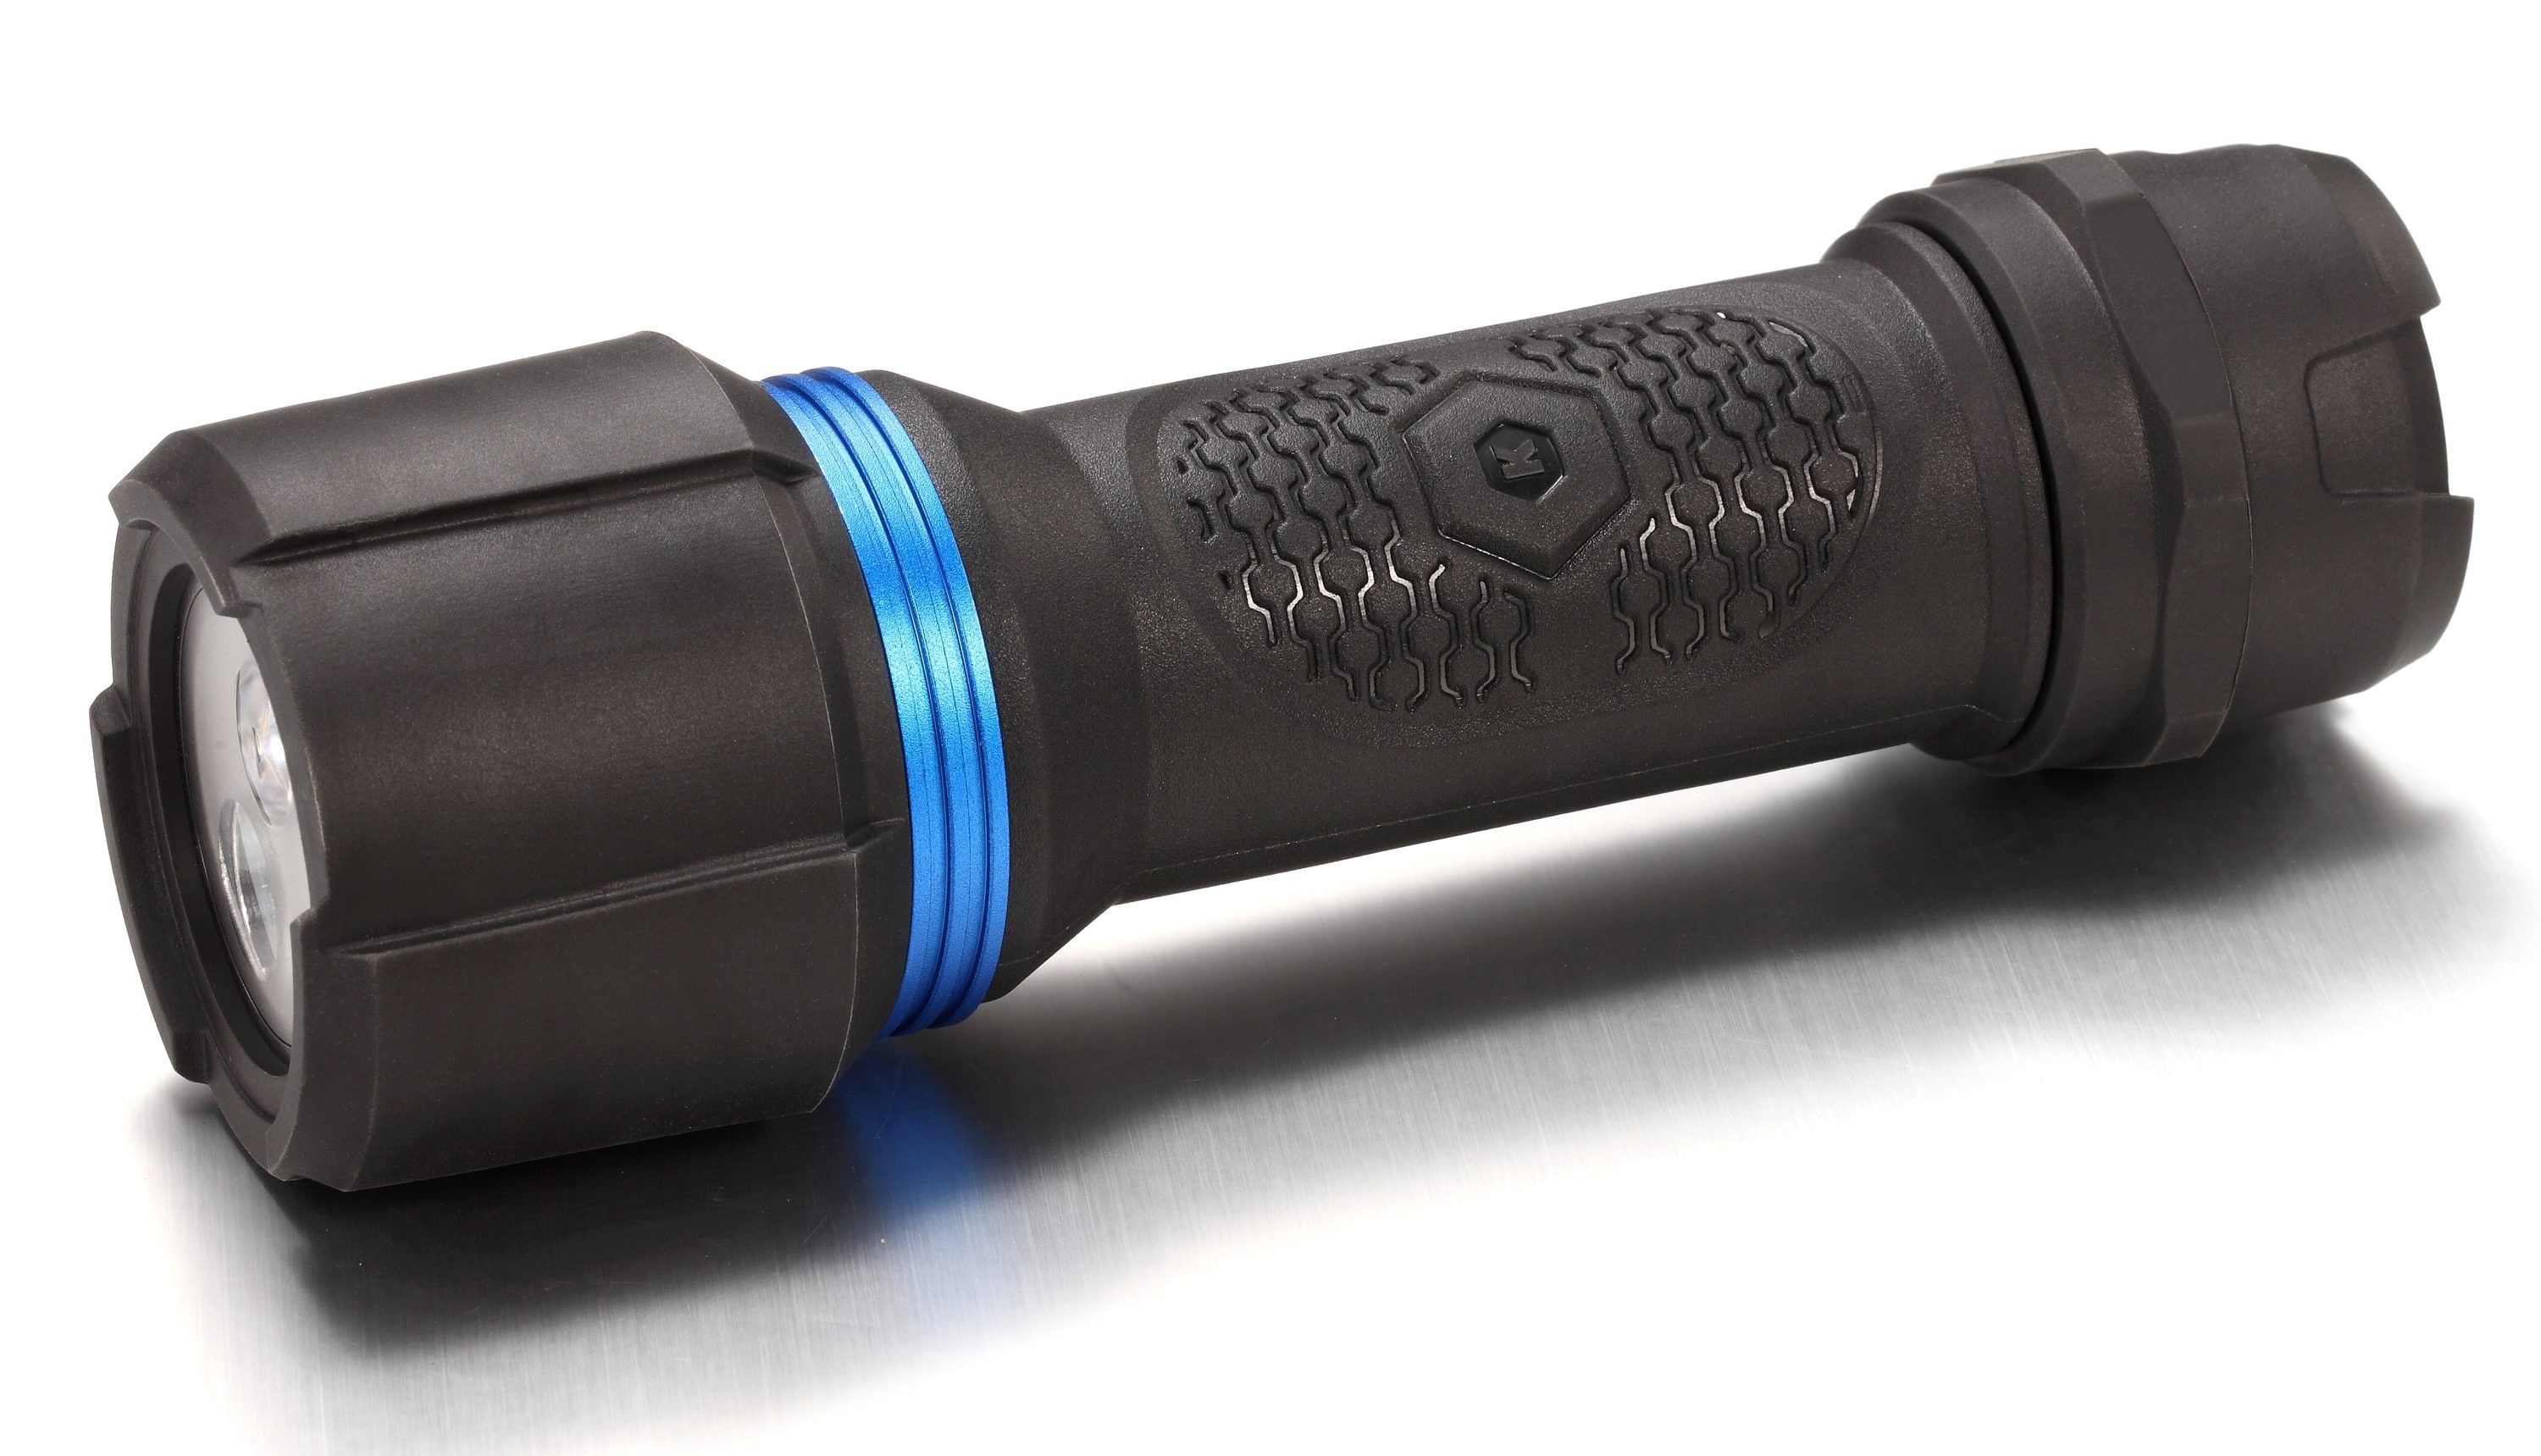 Dorcy 1,000-Lumen USB-Rechargeable Instant Spot Flood Flashlight Black  41-4358 - Best Buy